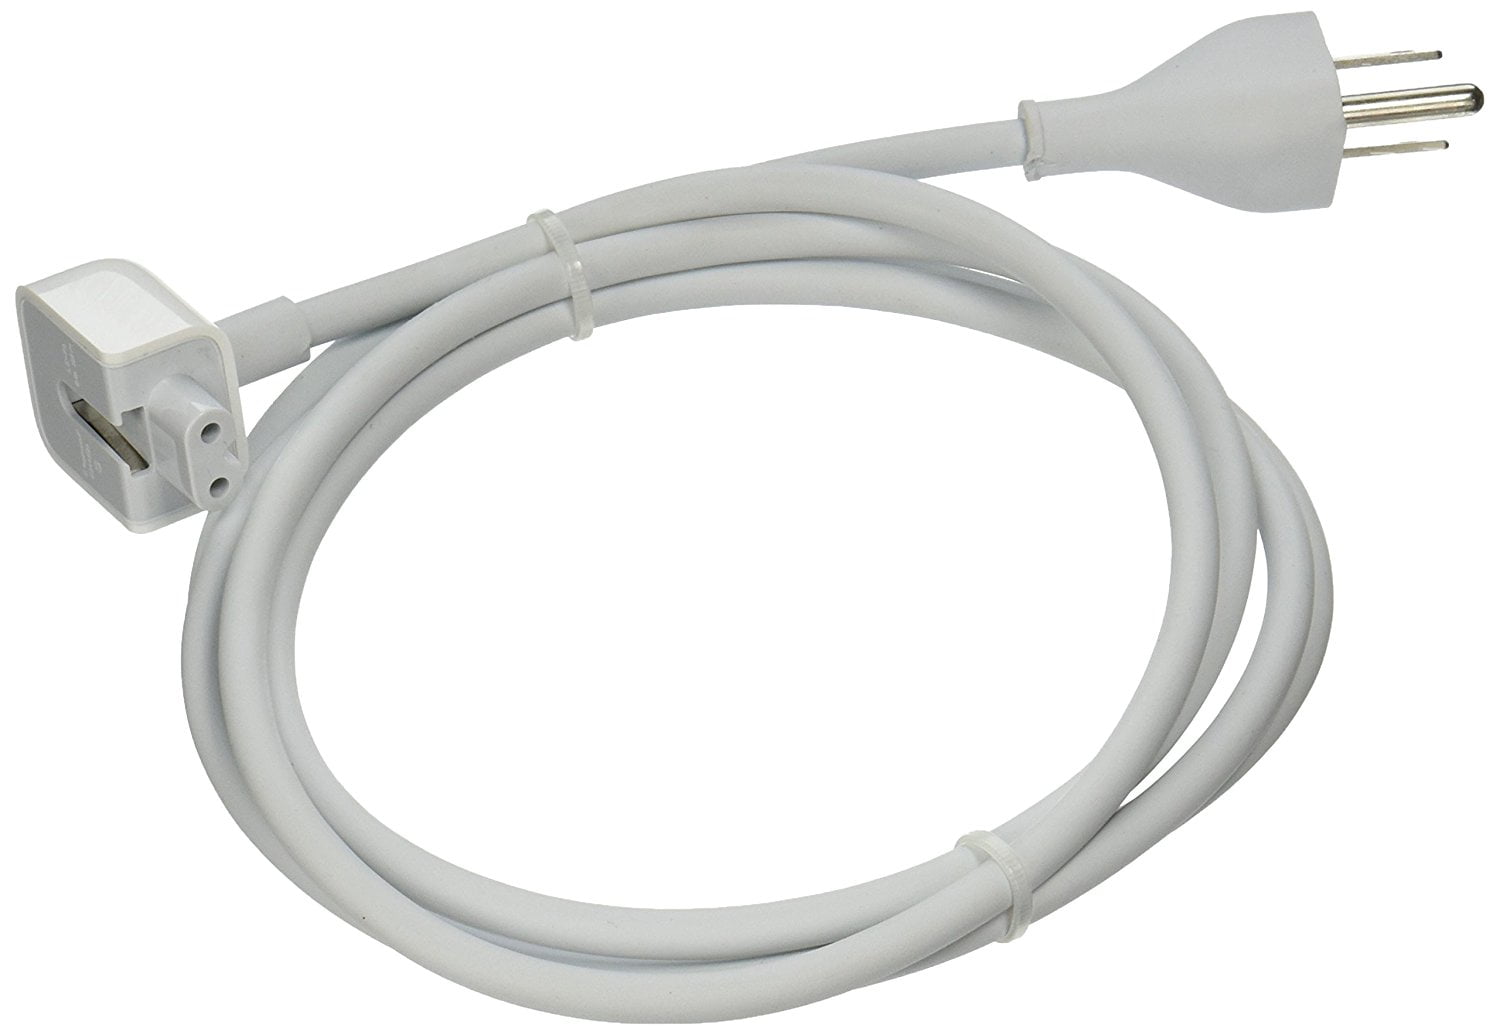 Kemi søster Vedhæft til Power Adapter Extension Wall Cord Cable for Apple Mac iBook Macbook Pro, US  Plug - Walmart.com